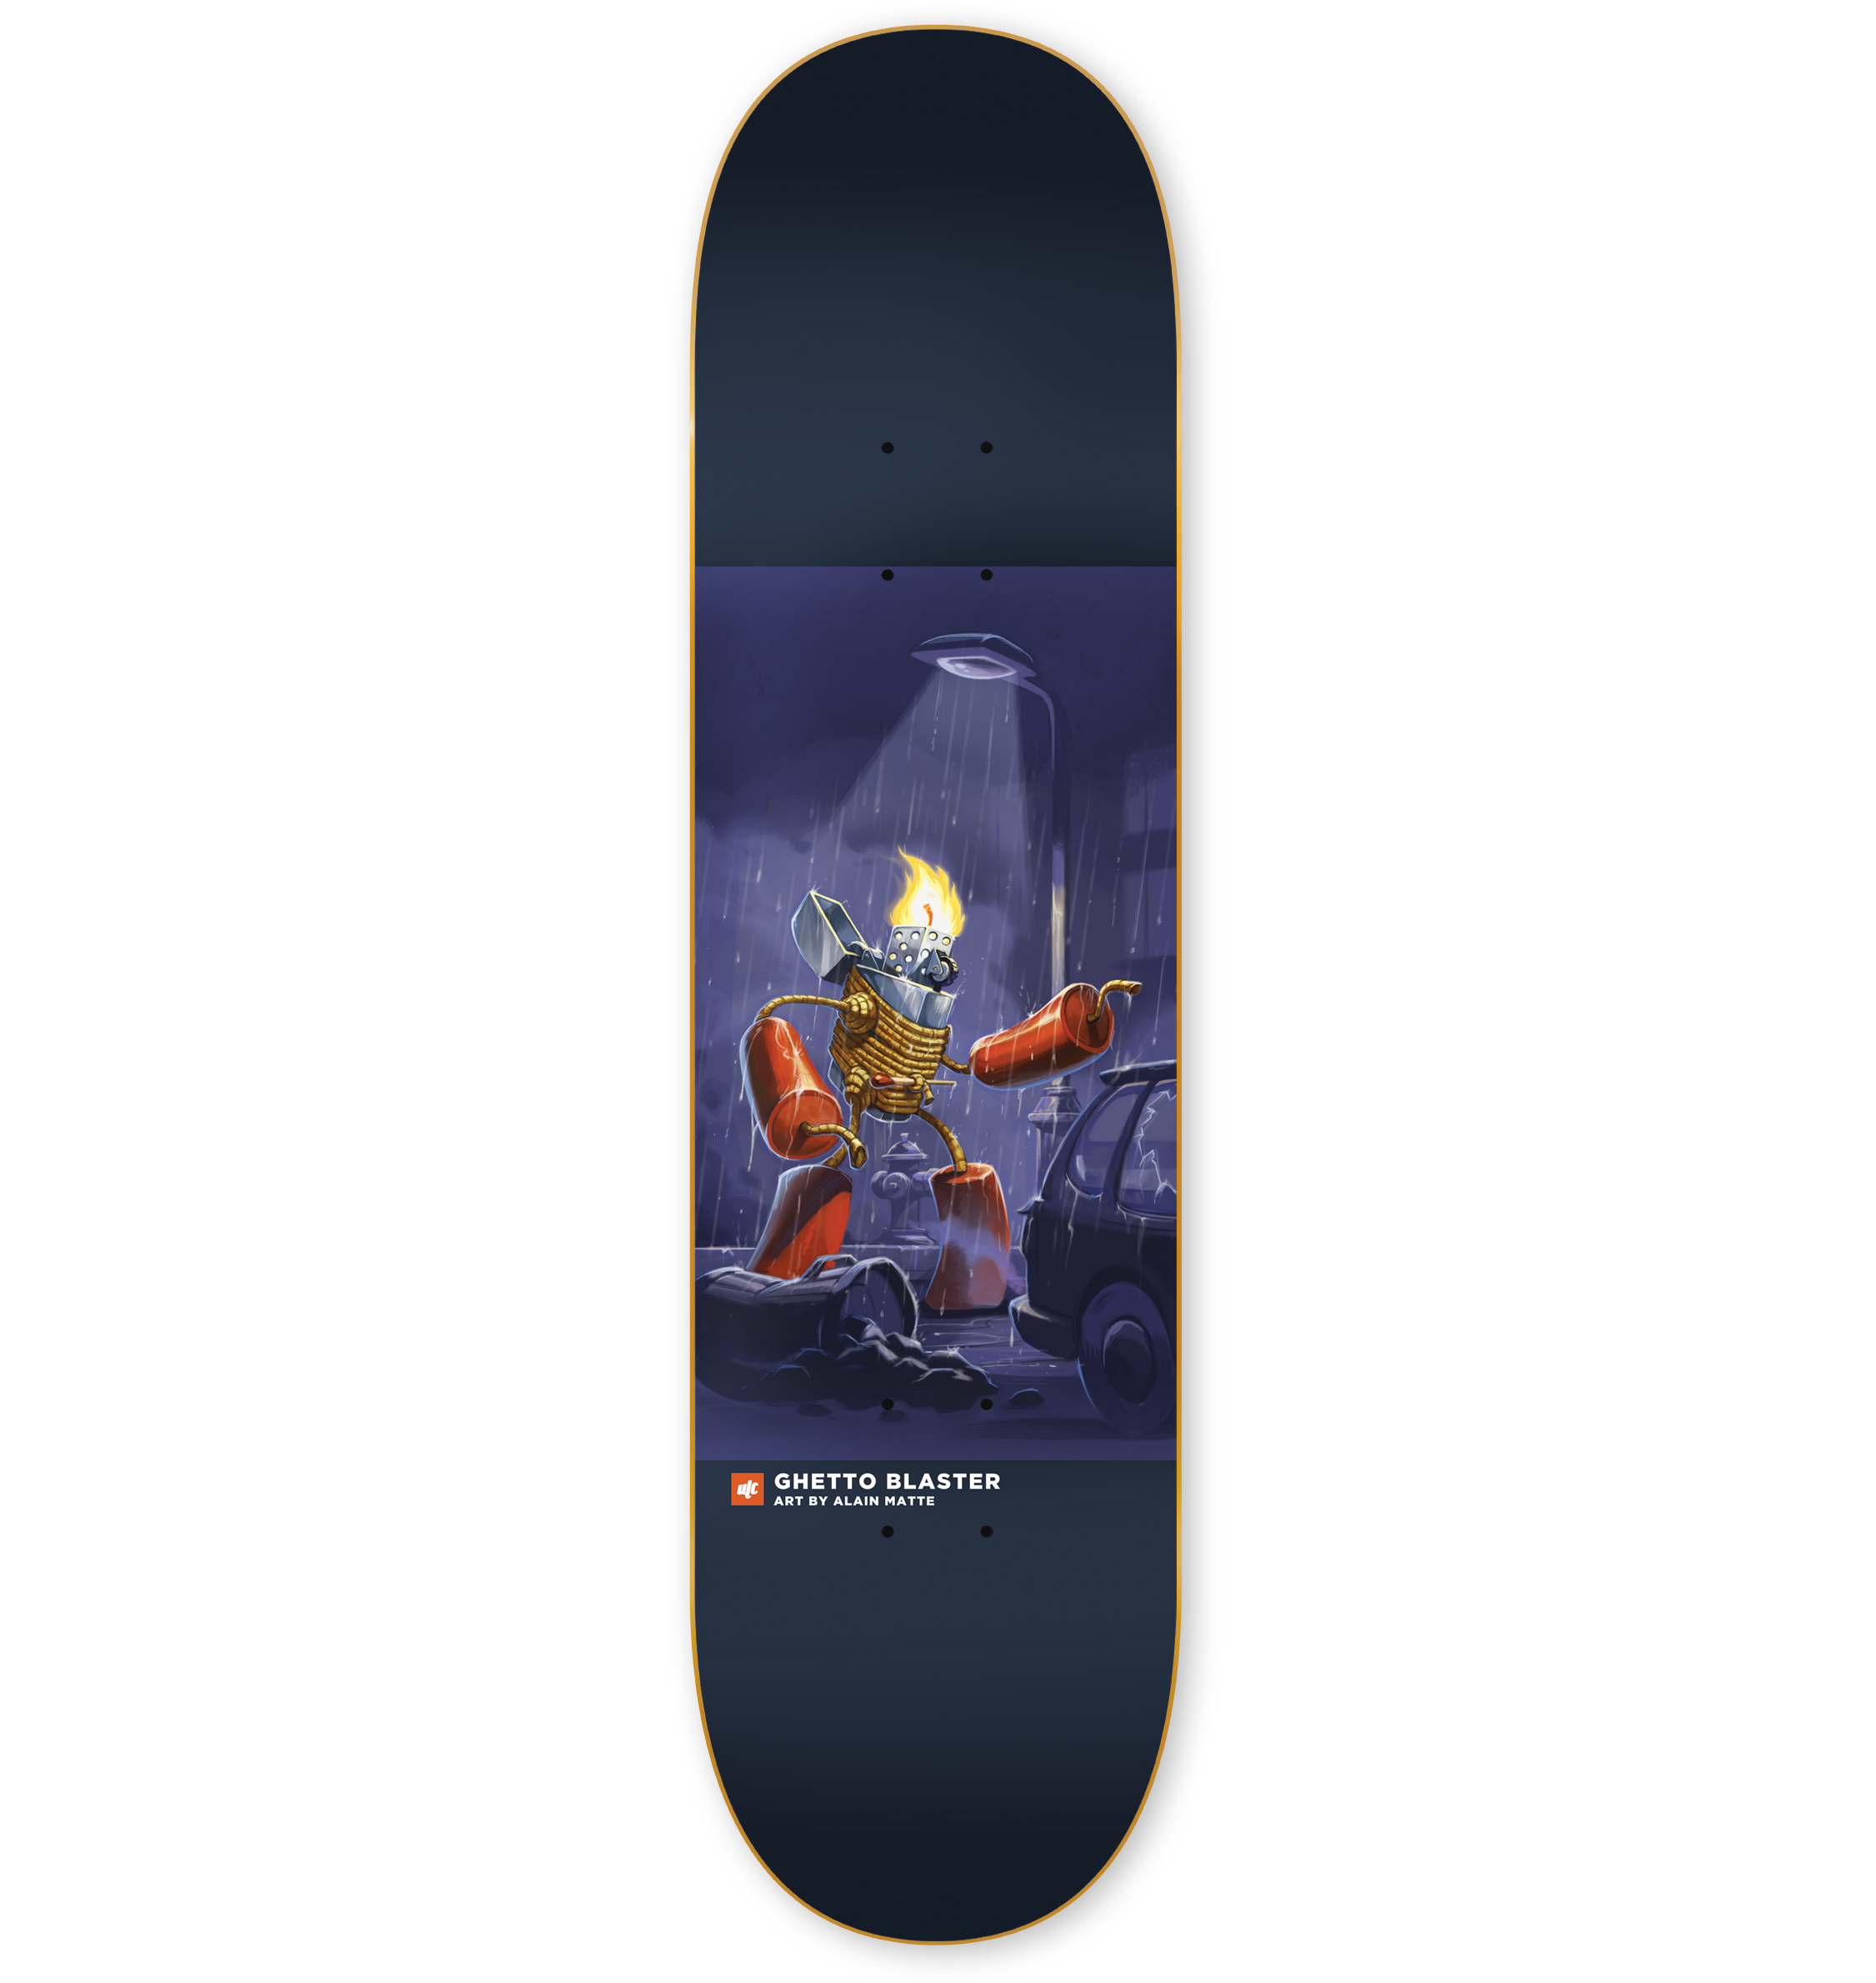 ULC Ghetto Blaster - Skateboard Deck